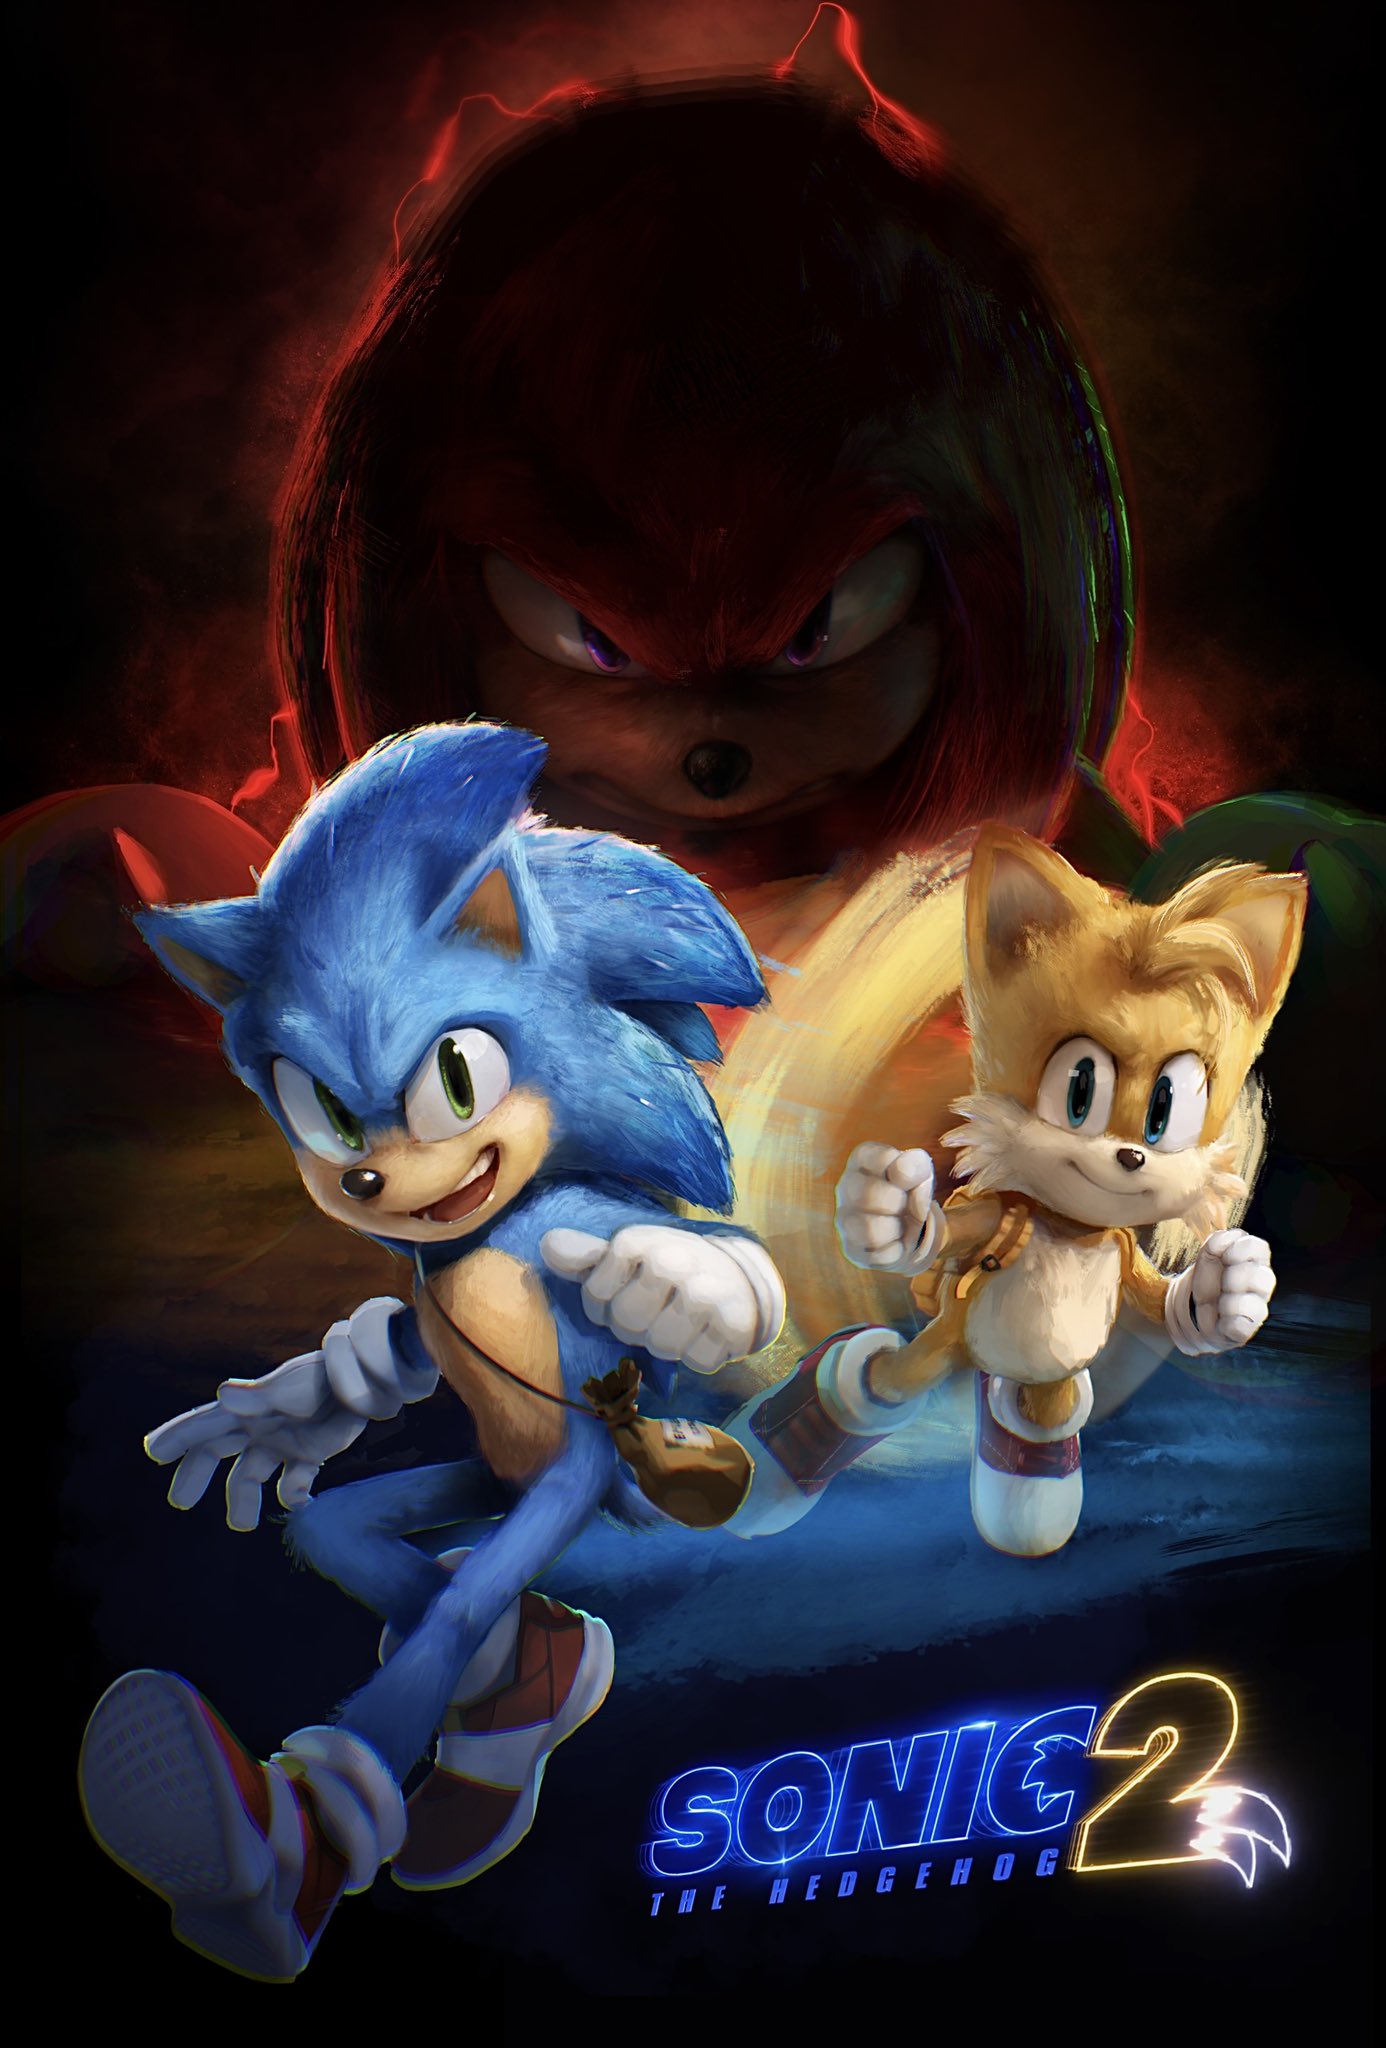 Tyson Hesse's Sonic 2 movie poster. Sonic the Hedgehog (2020 Film)